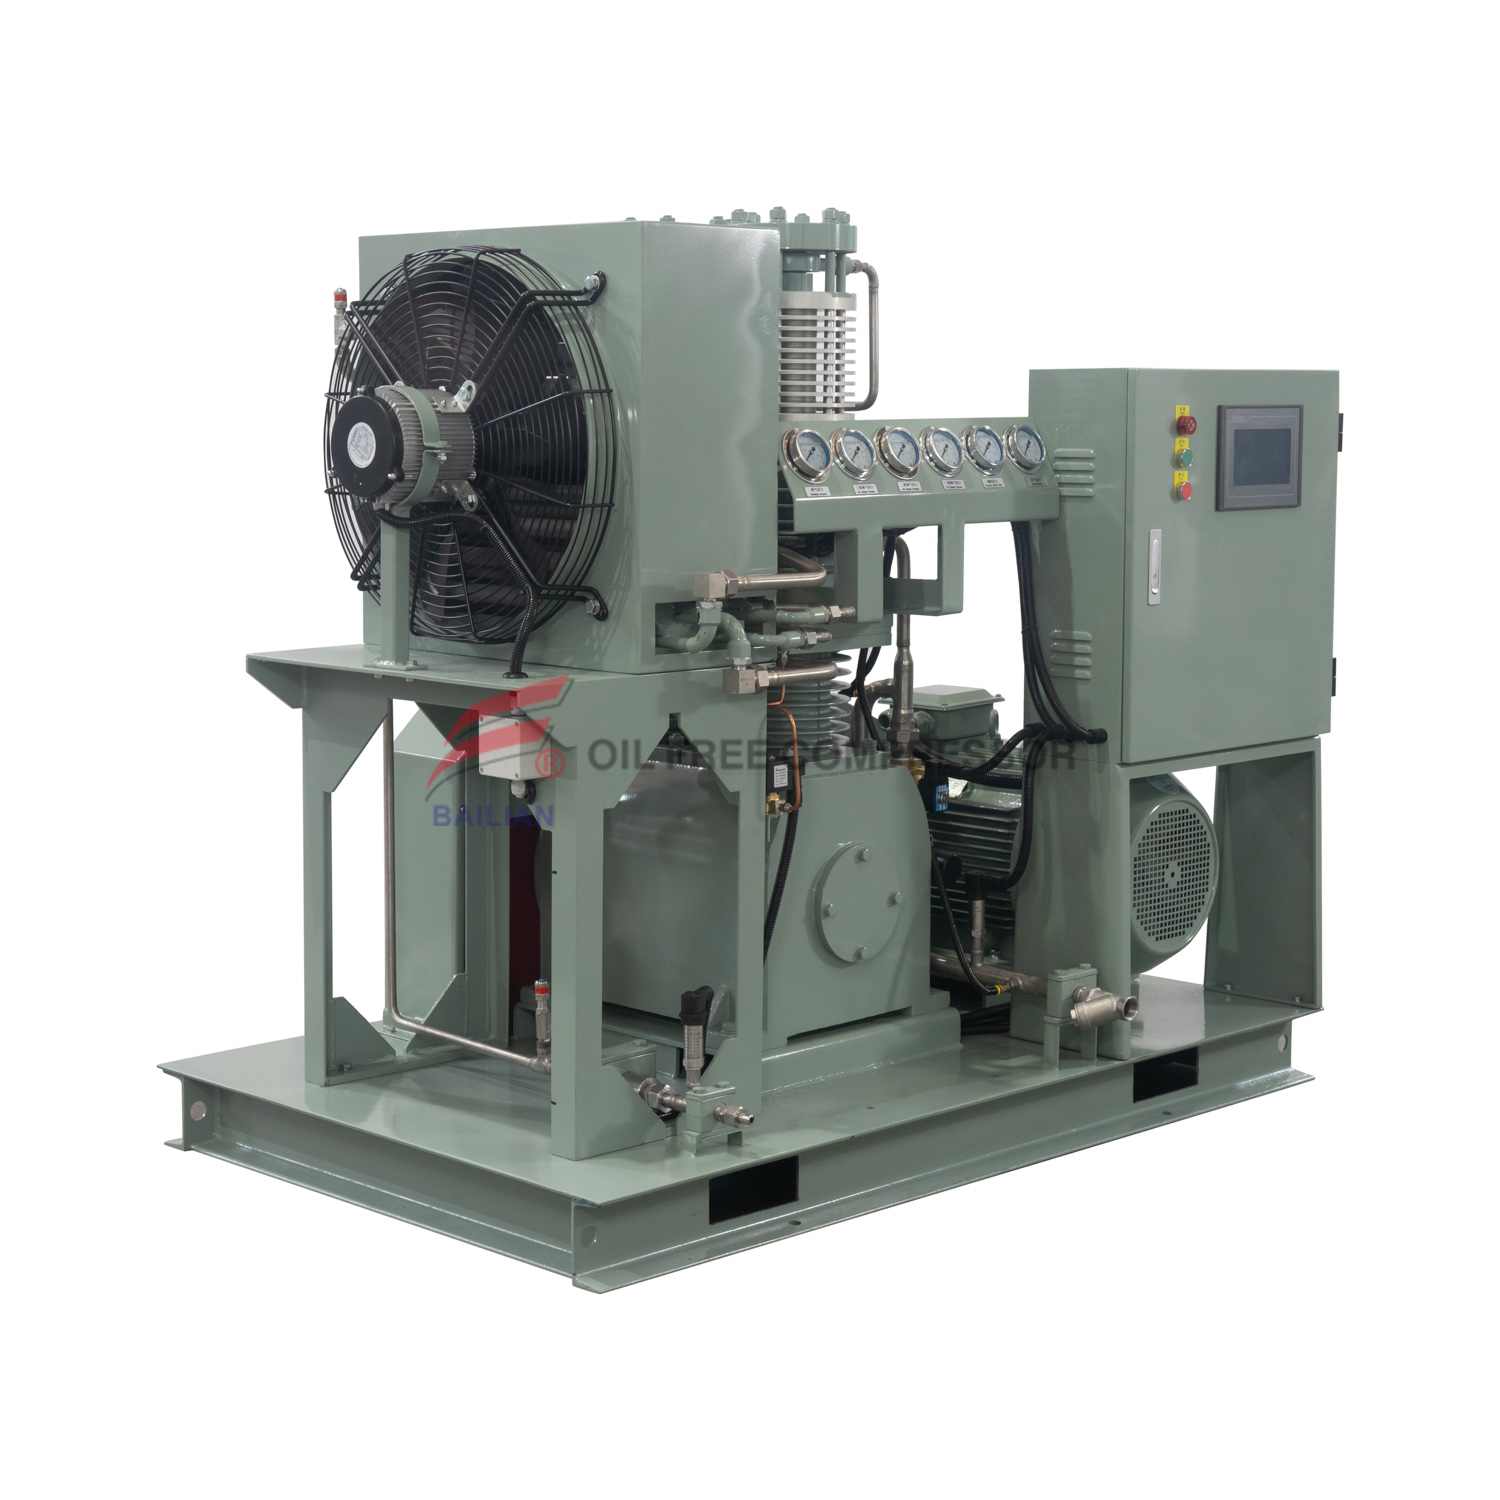 GZW-40/8-300 Oil Free Lubrication Vertical Type Nitrogen Compressor